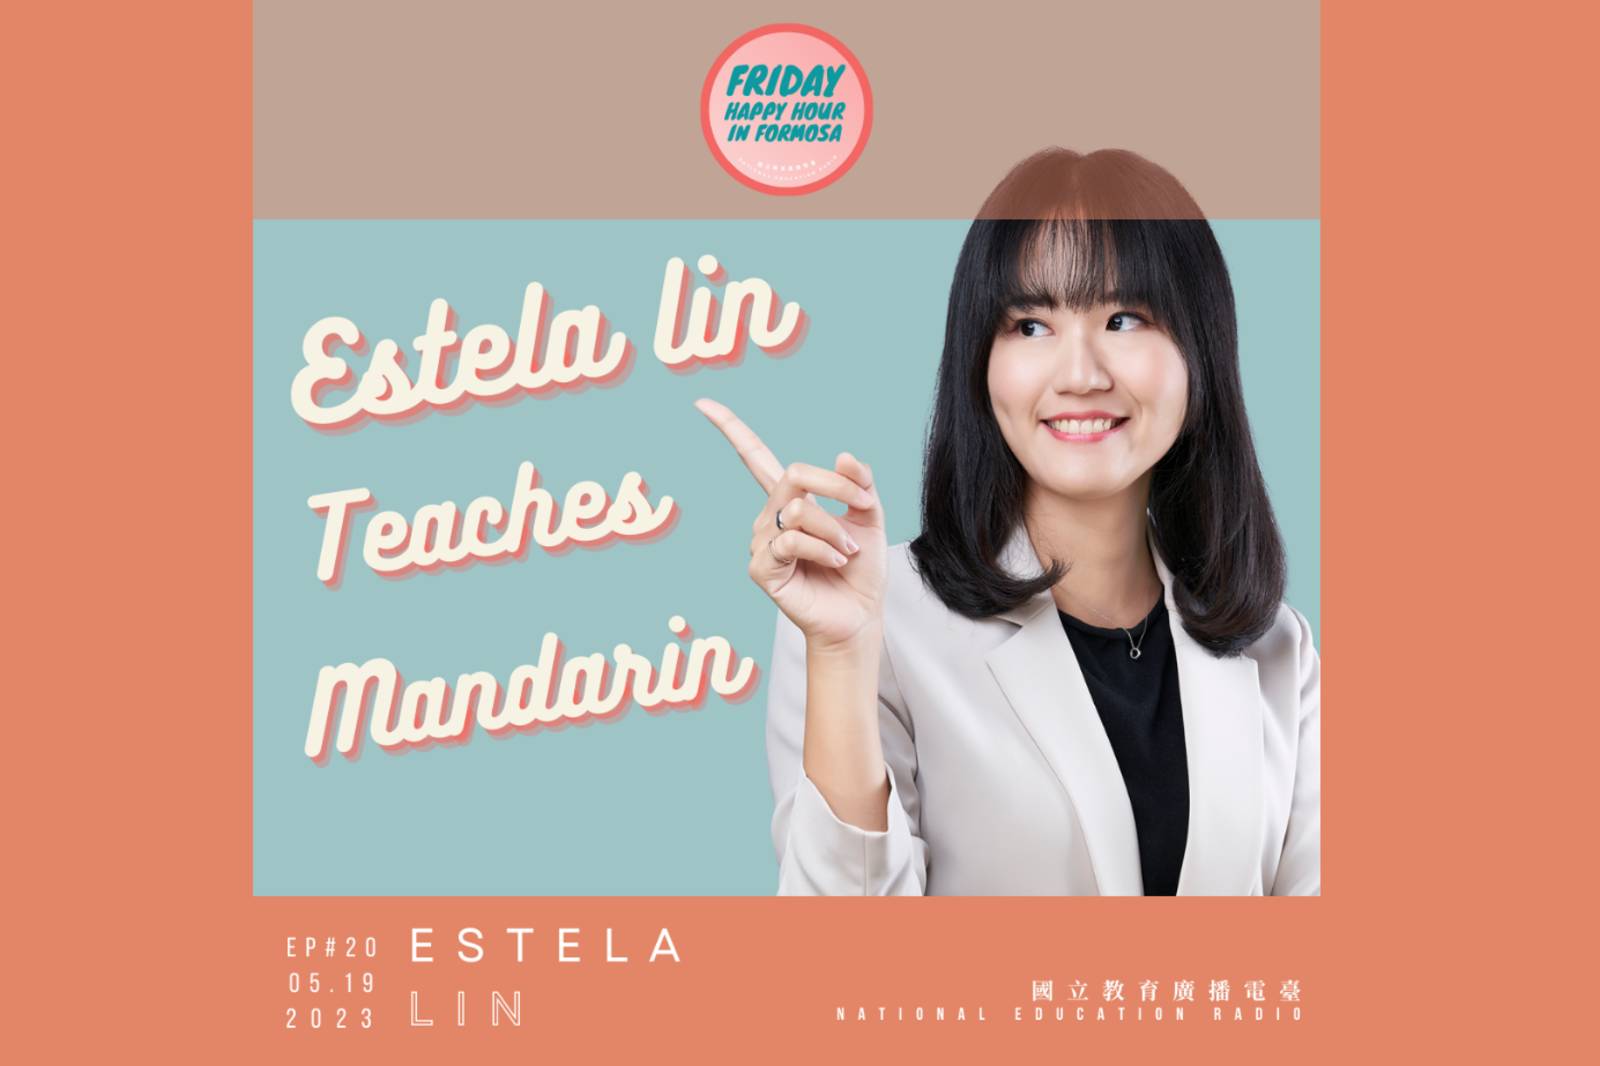 Estela老師來教你如何開心輕鬆學習中文 * Estela Lin Teaches Mandarin 